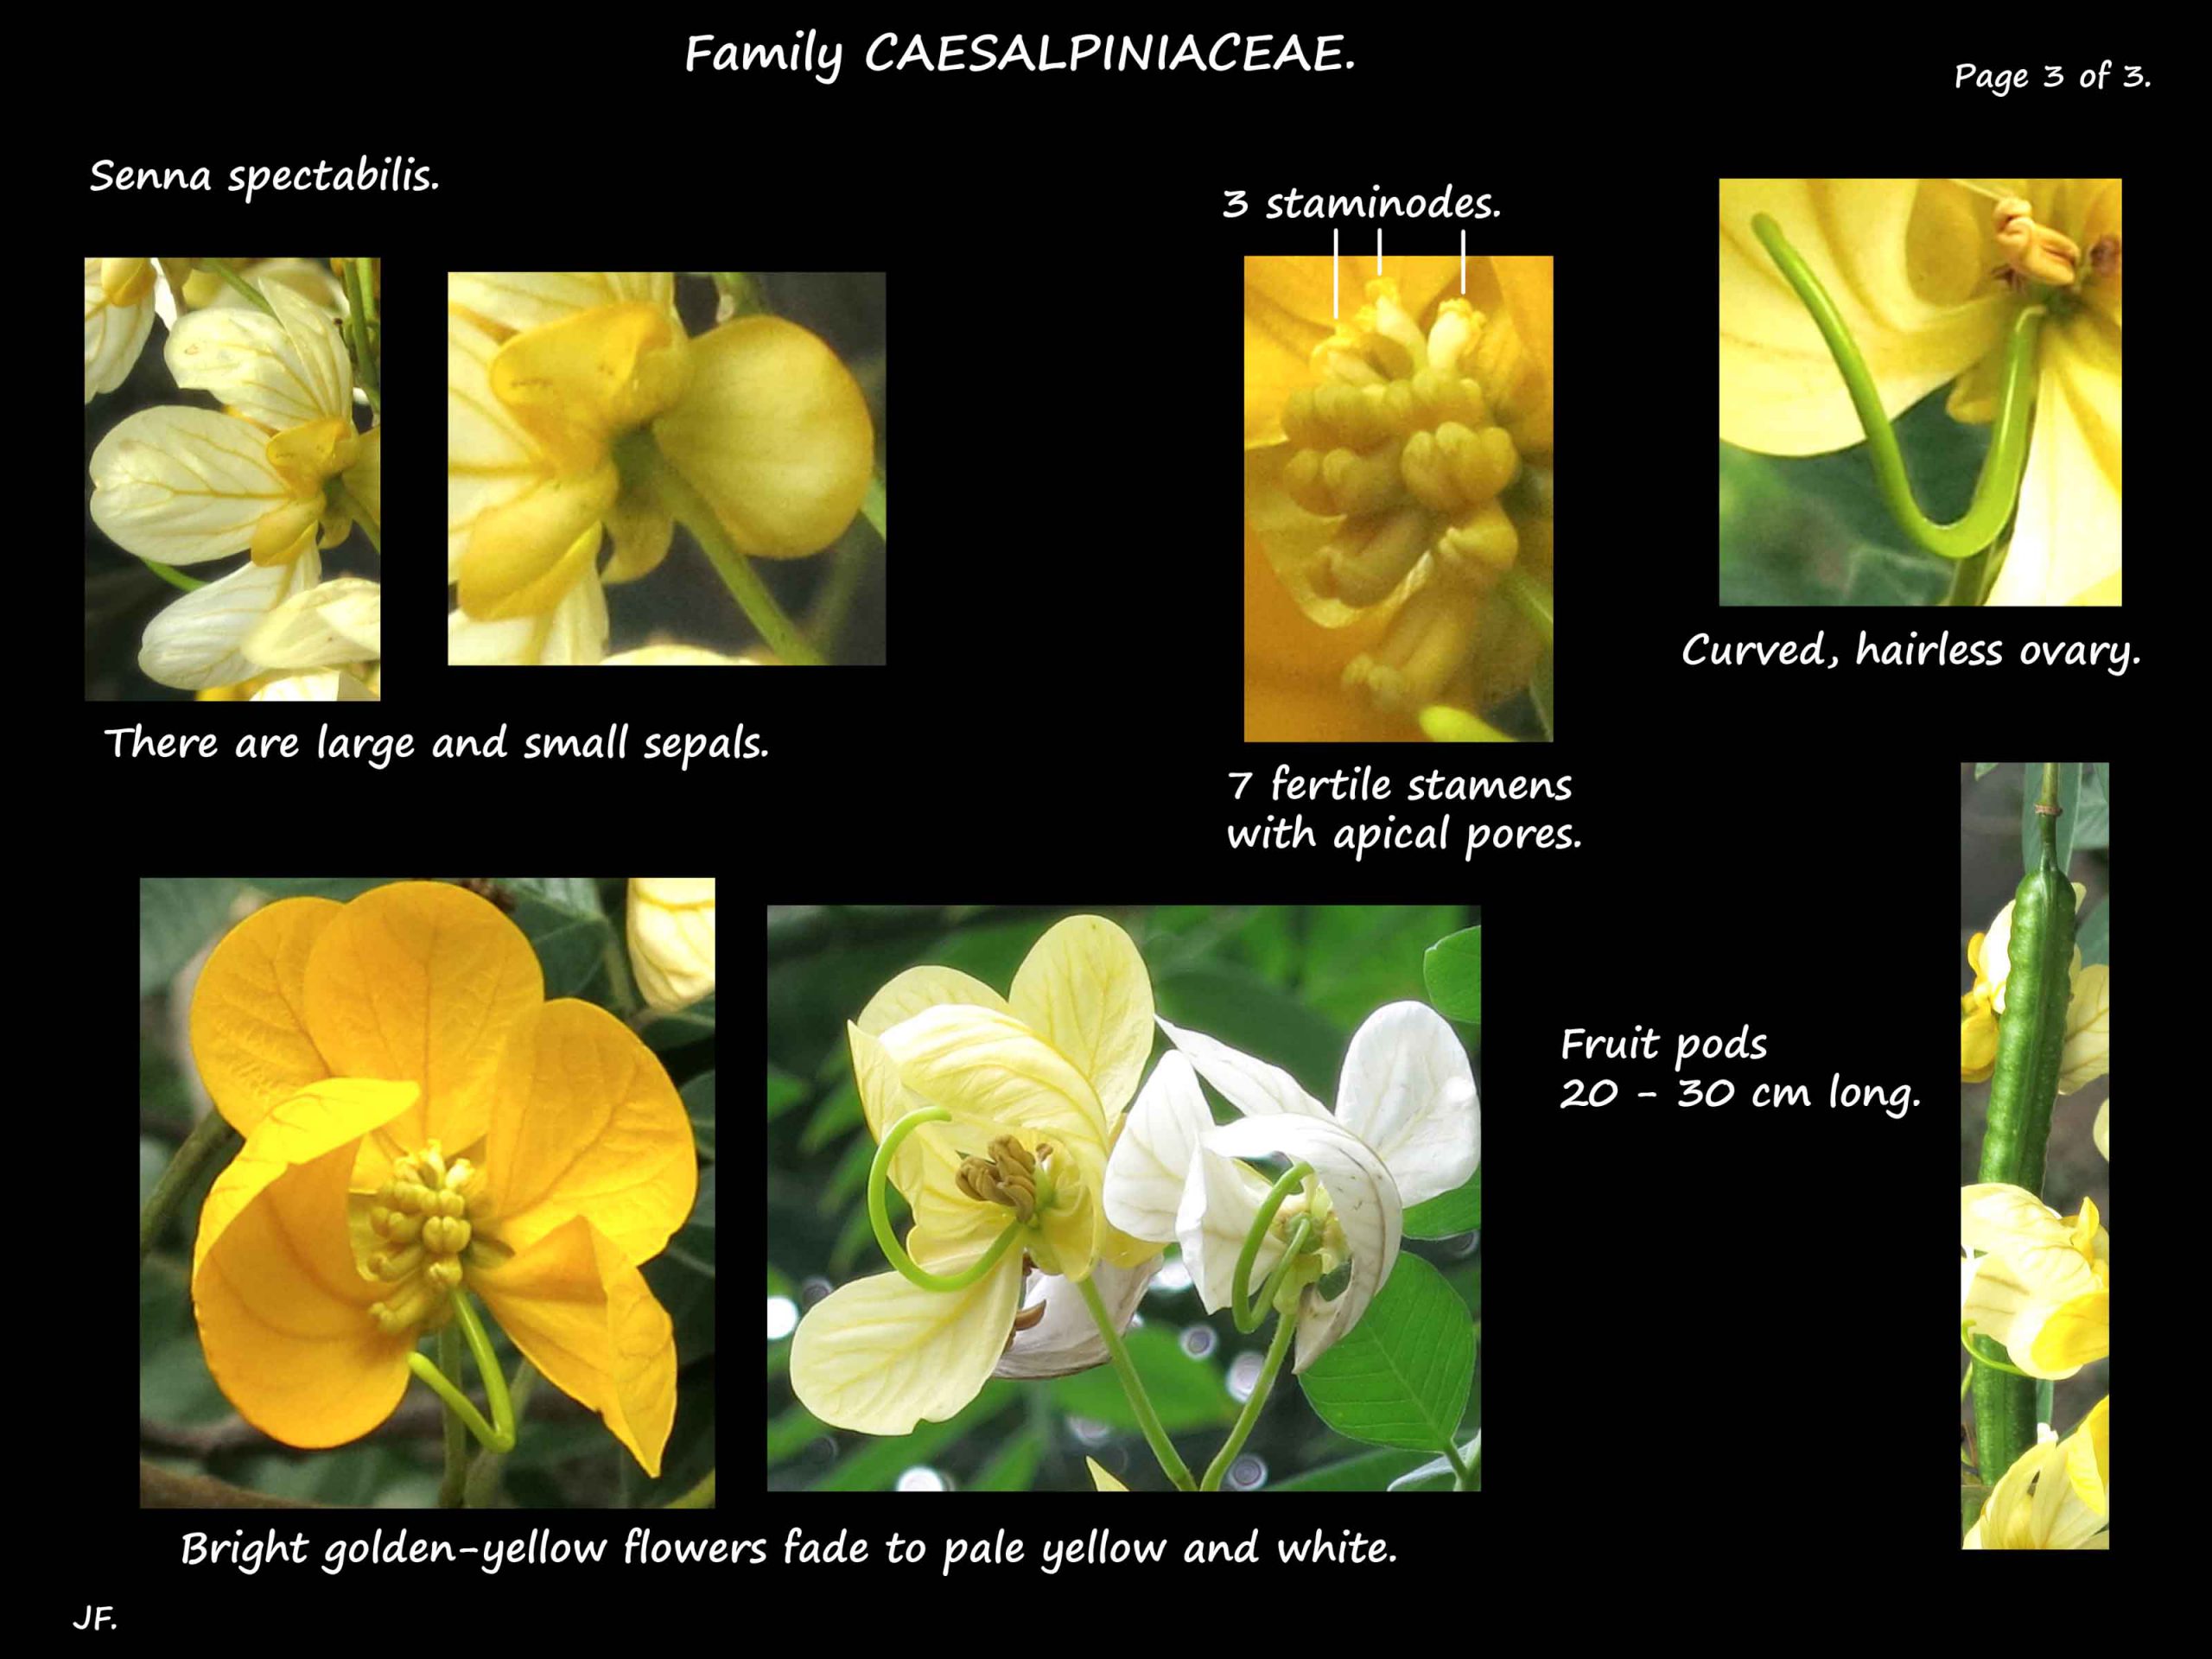 3 Senna spectabilis flowers